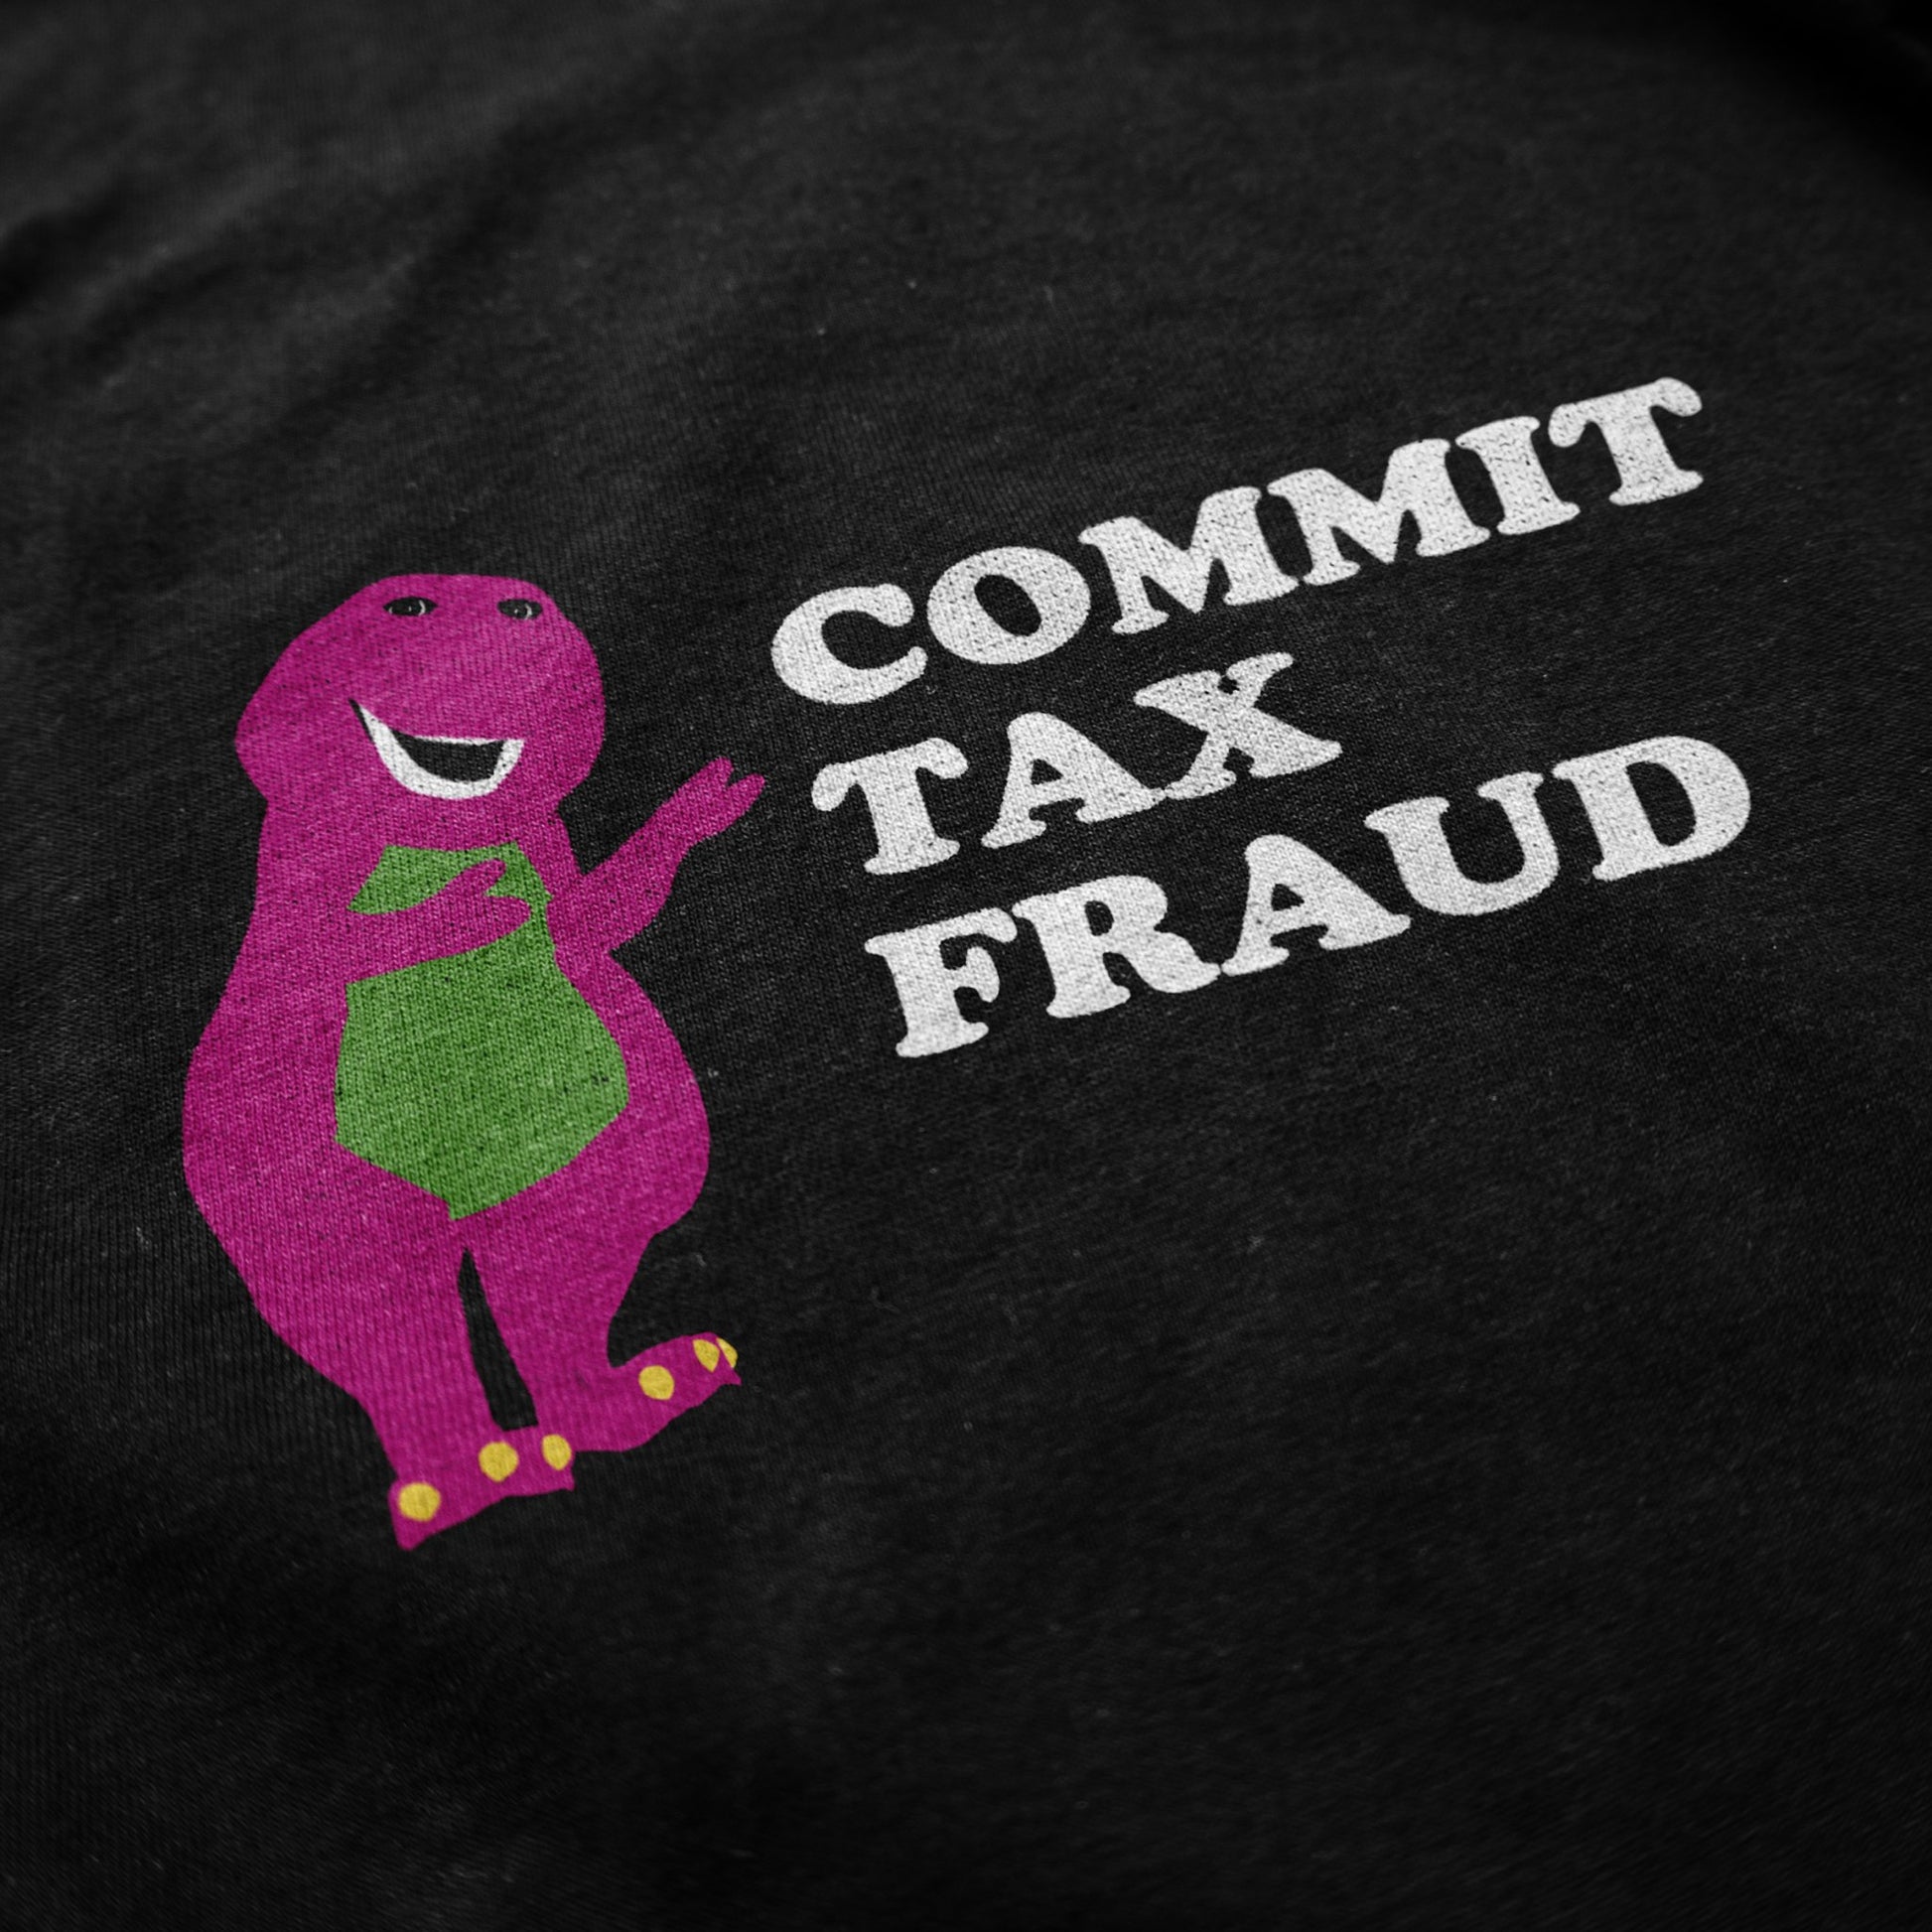 Commit Tax Fraud Crewneck Sweatshirt - Shitheadsteve